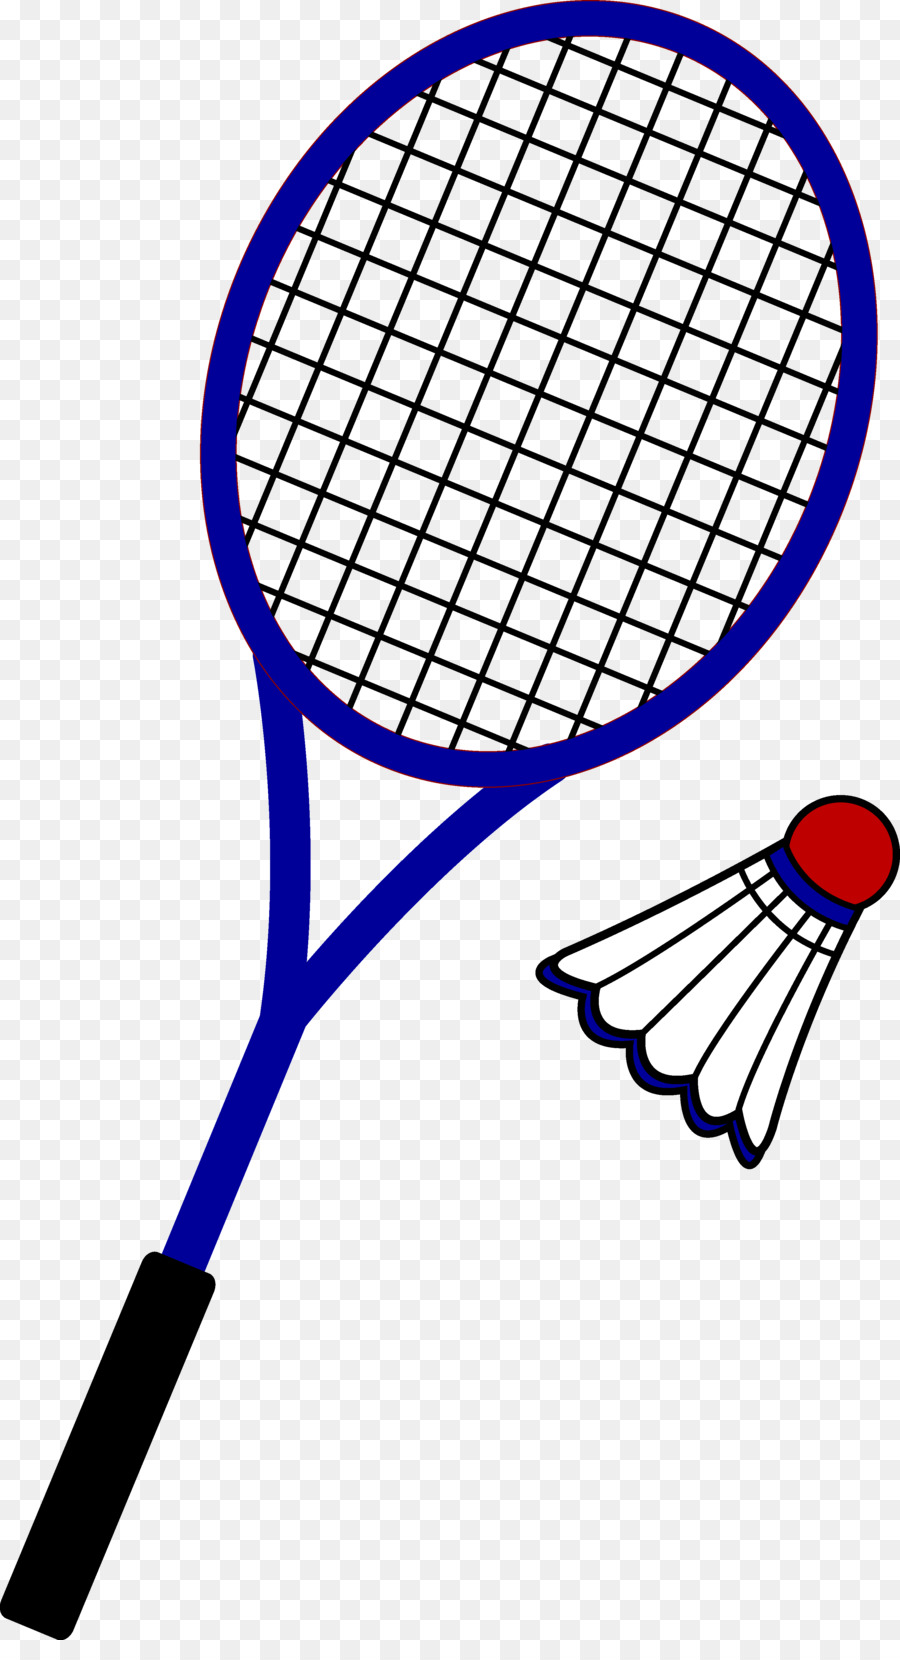 Racket Rakieta tenisowa Tennis Ball Clip art - Badminton png download - 3069*5594 - Free Transparent Racket png Download.